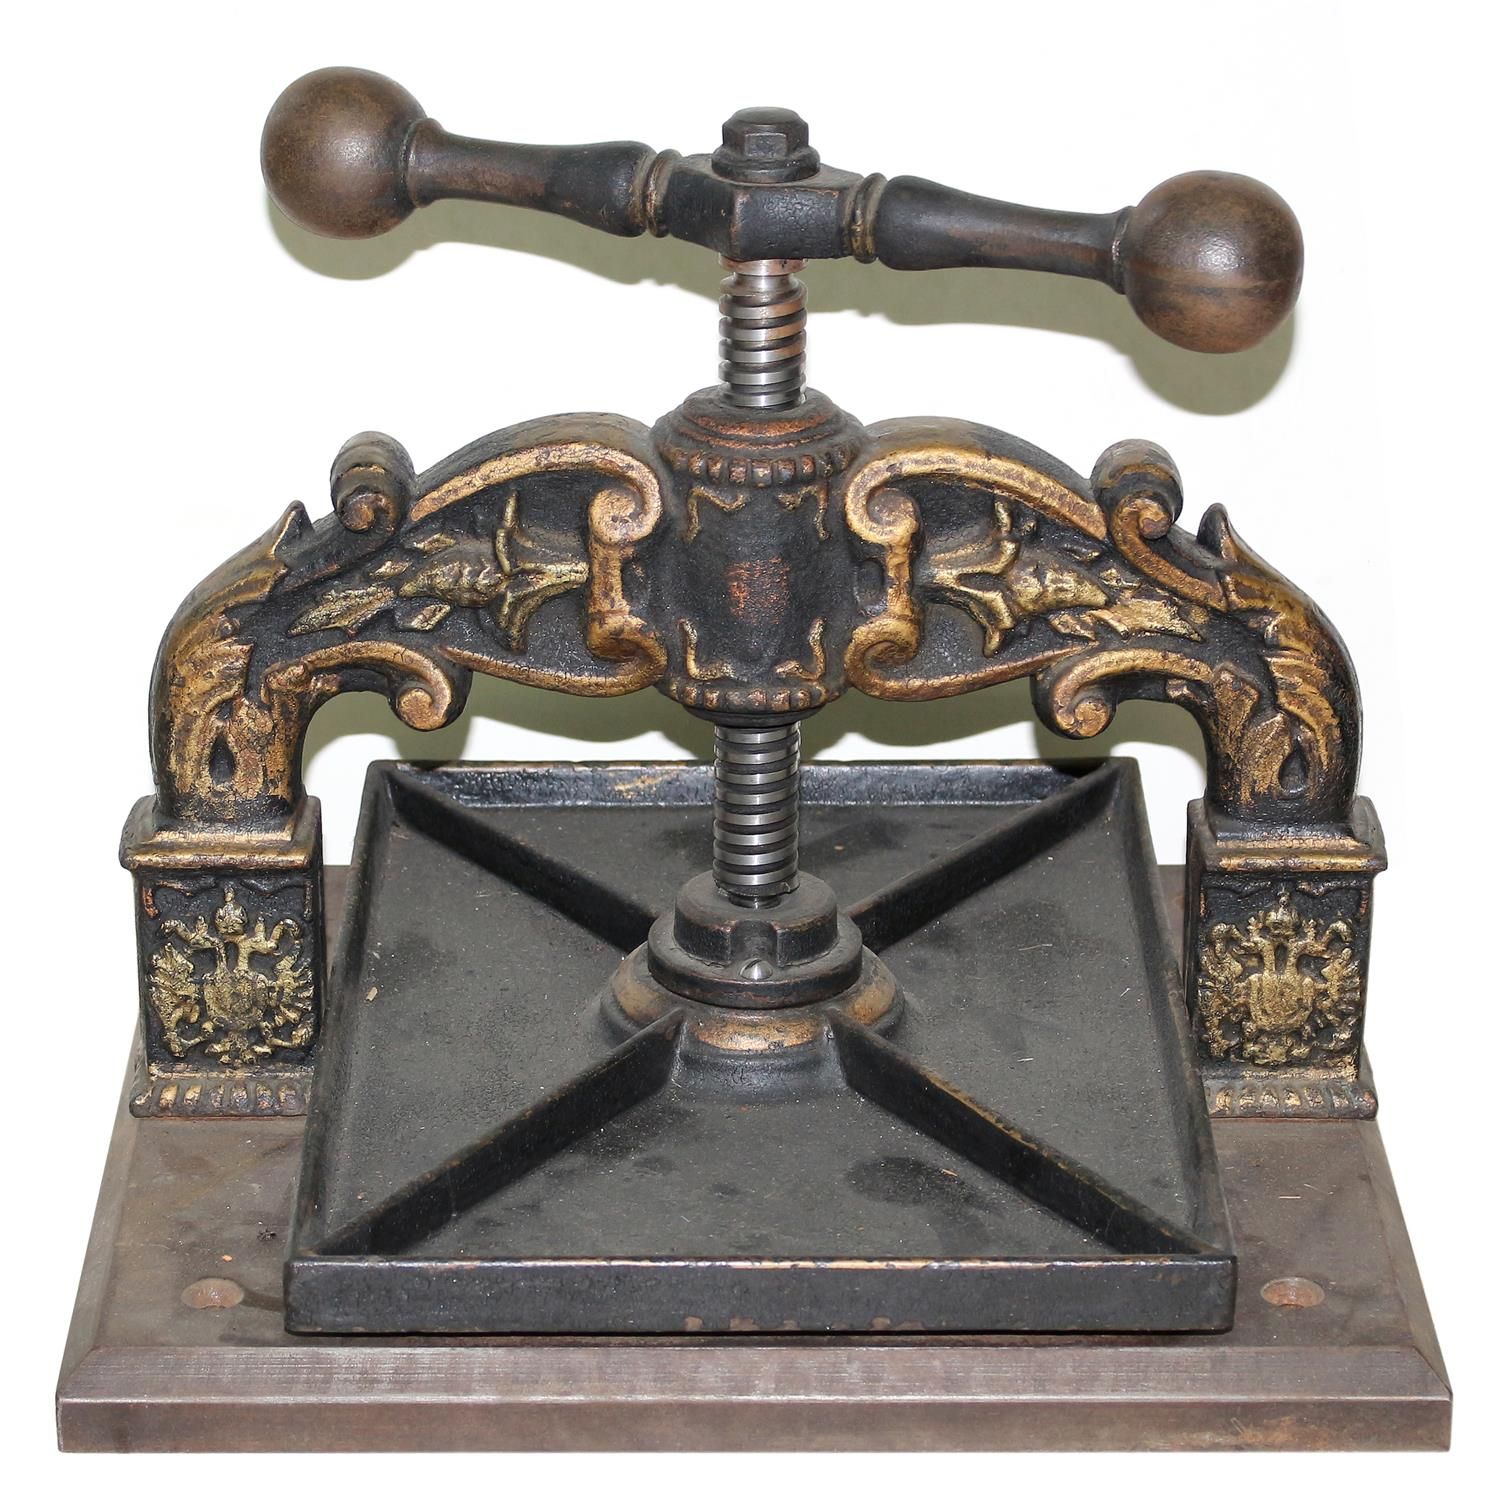 Buchpresse, 19.Jhdt. 宏伟的铸铁压书机。铁铸，有华丽的装饰。刺桐叶，侧面有双头鹰的纹章。机械方面，秩序良好。可能是亚历山大的作品。非常好的例&hellip;